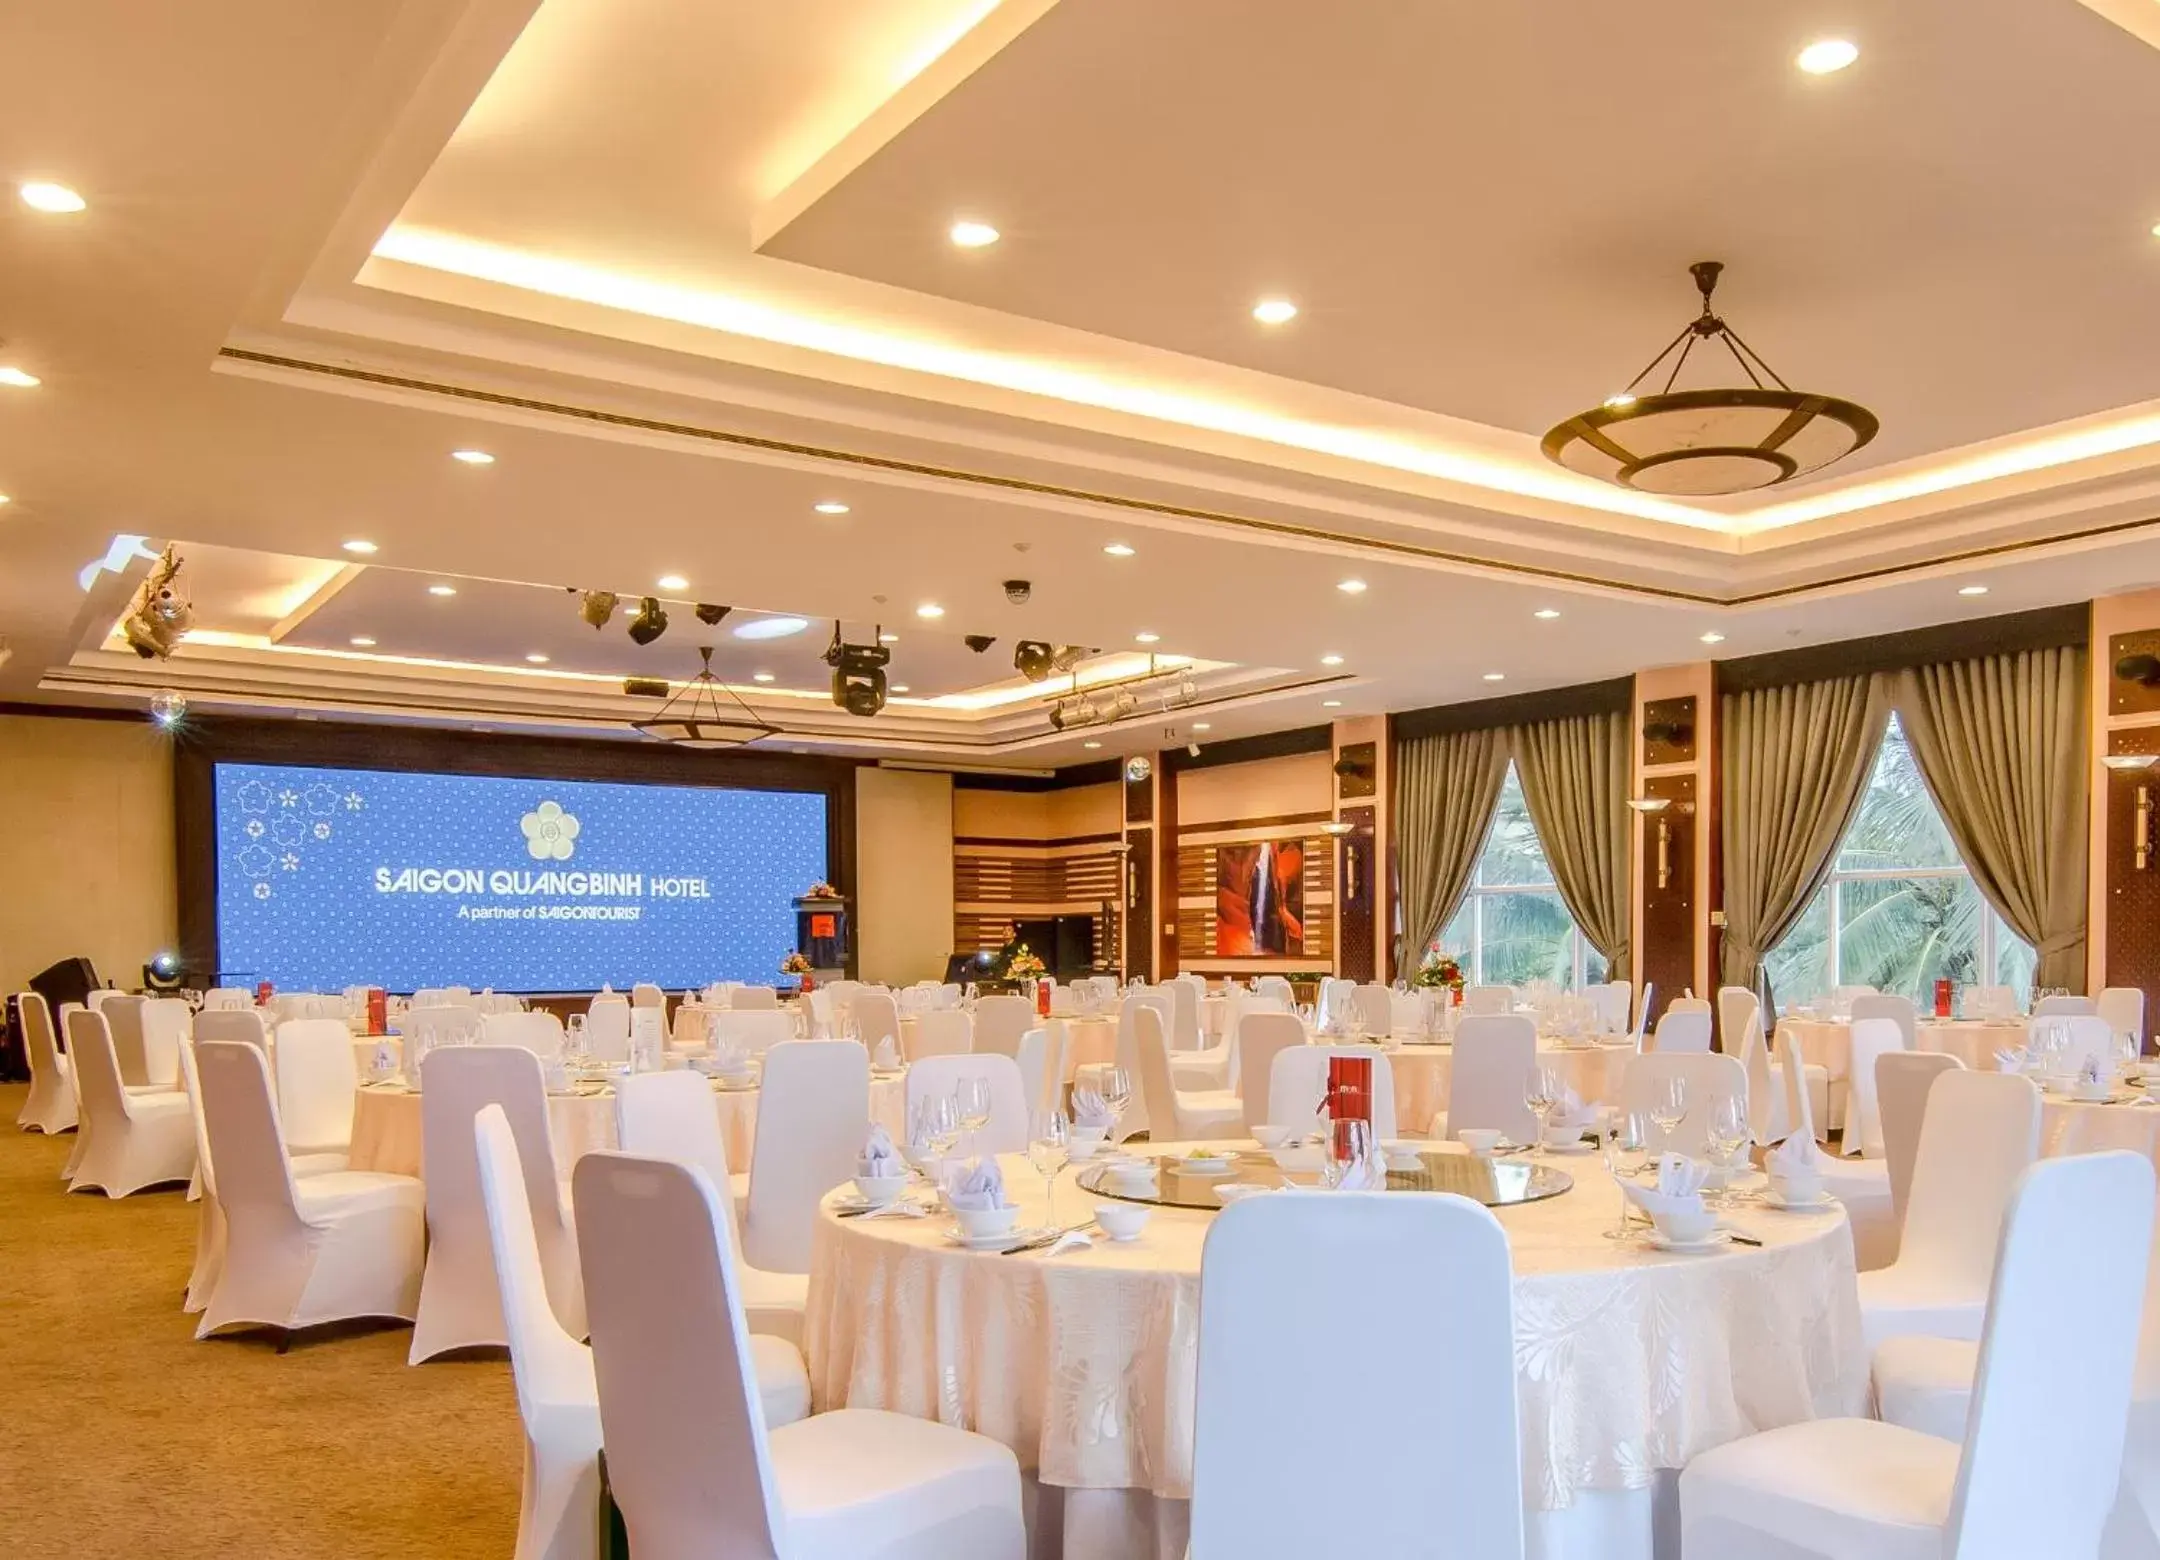 Banquet/Function facilities, Banquet Facilities in Sai Gon Quang Binh Hotel